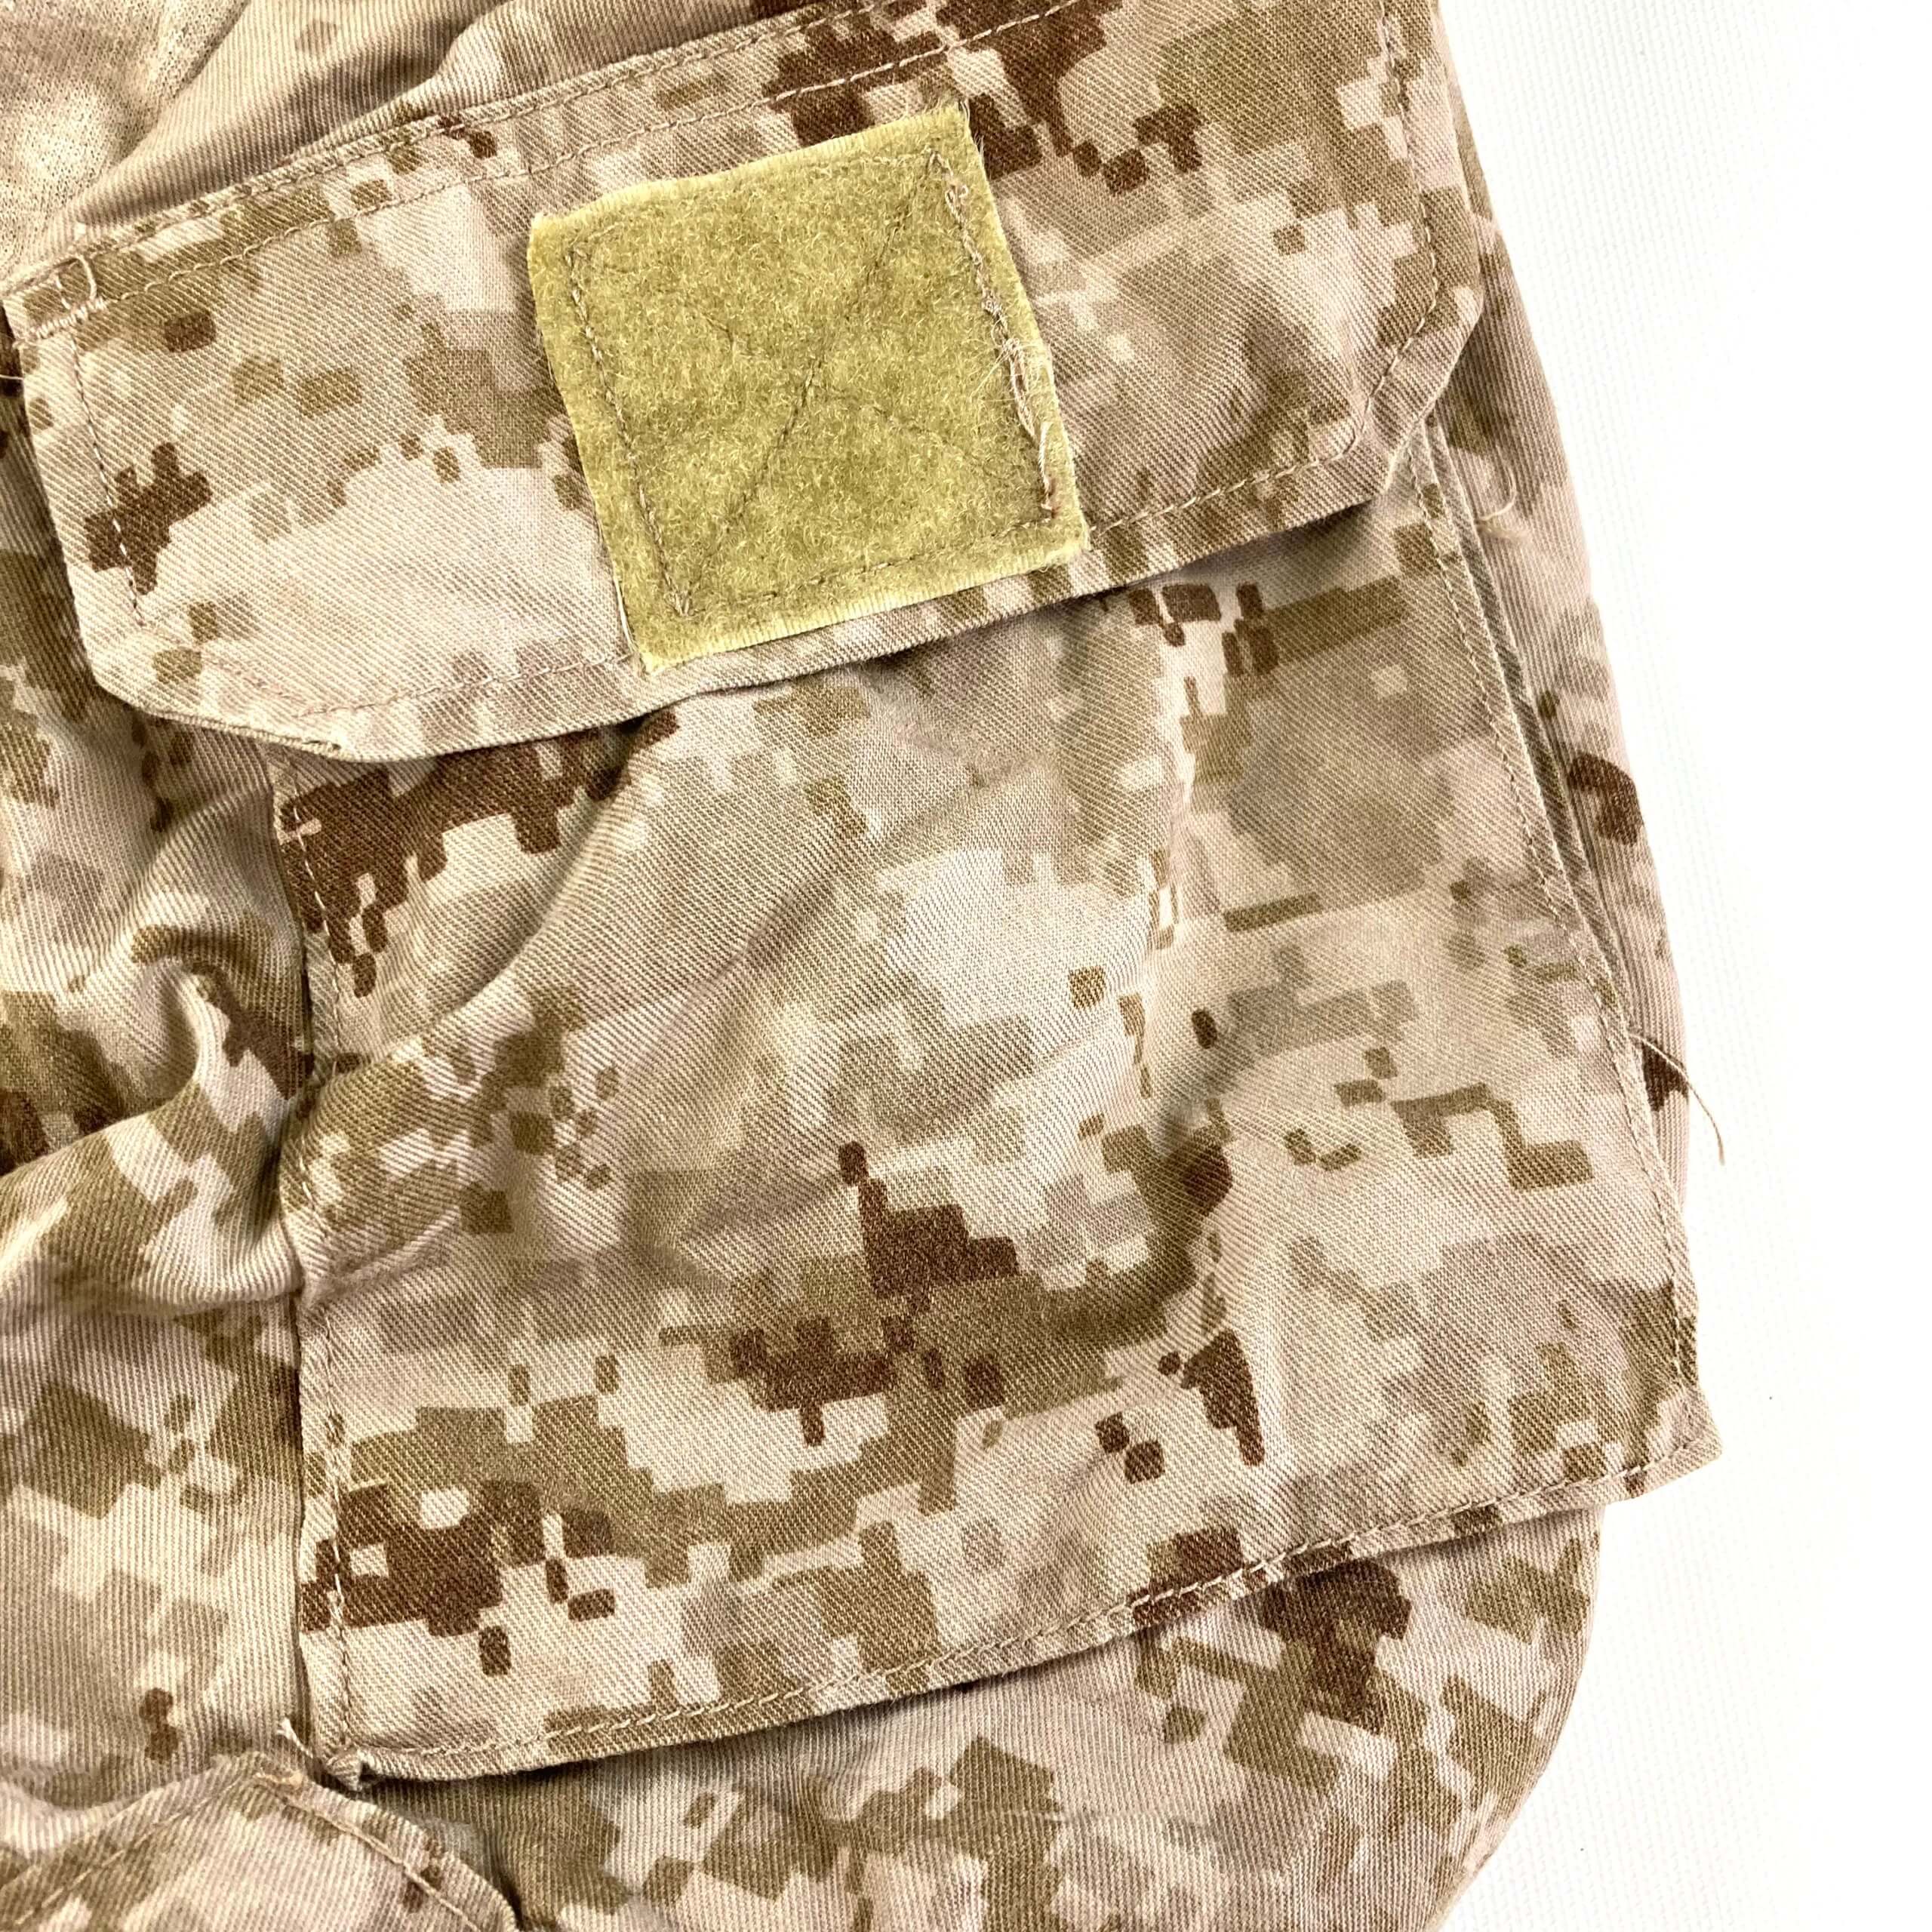 AUTHENTIC NEW USMC Desert Frog Shirt SMALL REGULAR  MARPAT COMBAT Blouse